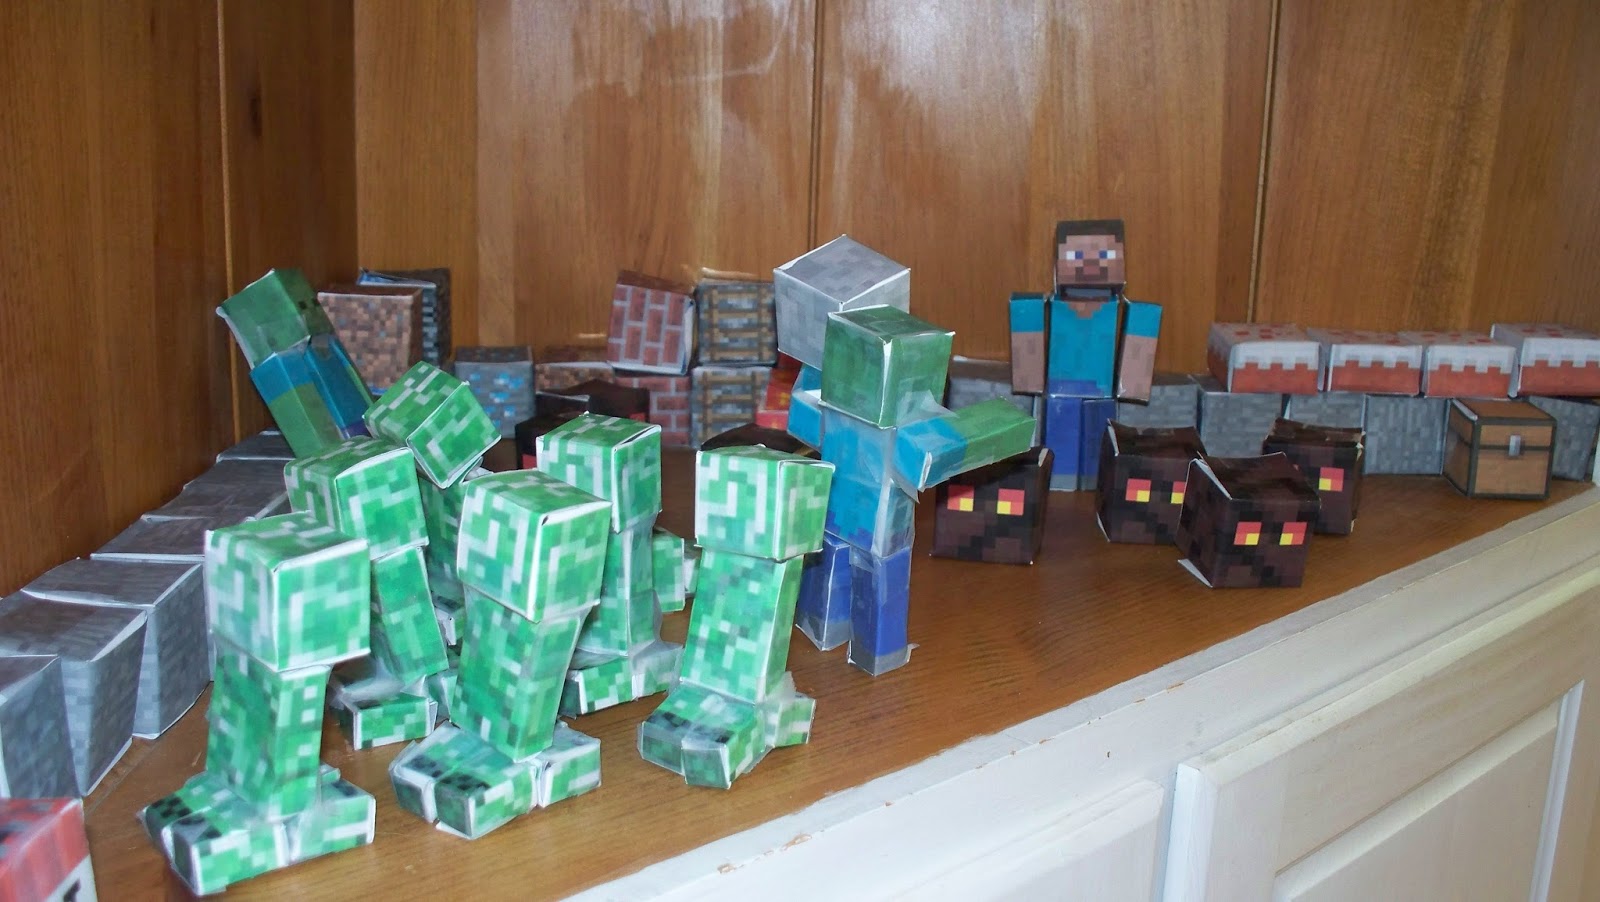 Minecraft Printable Papercraft Blocks - SET 1 - Minecraft Birthday Party  Supplies